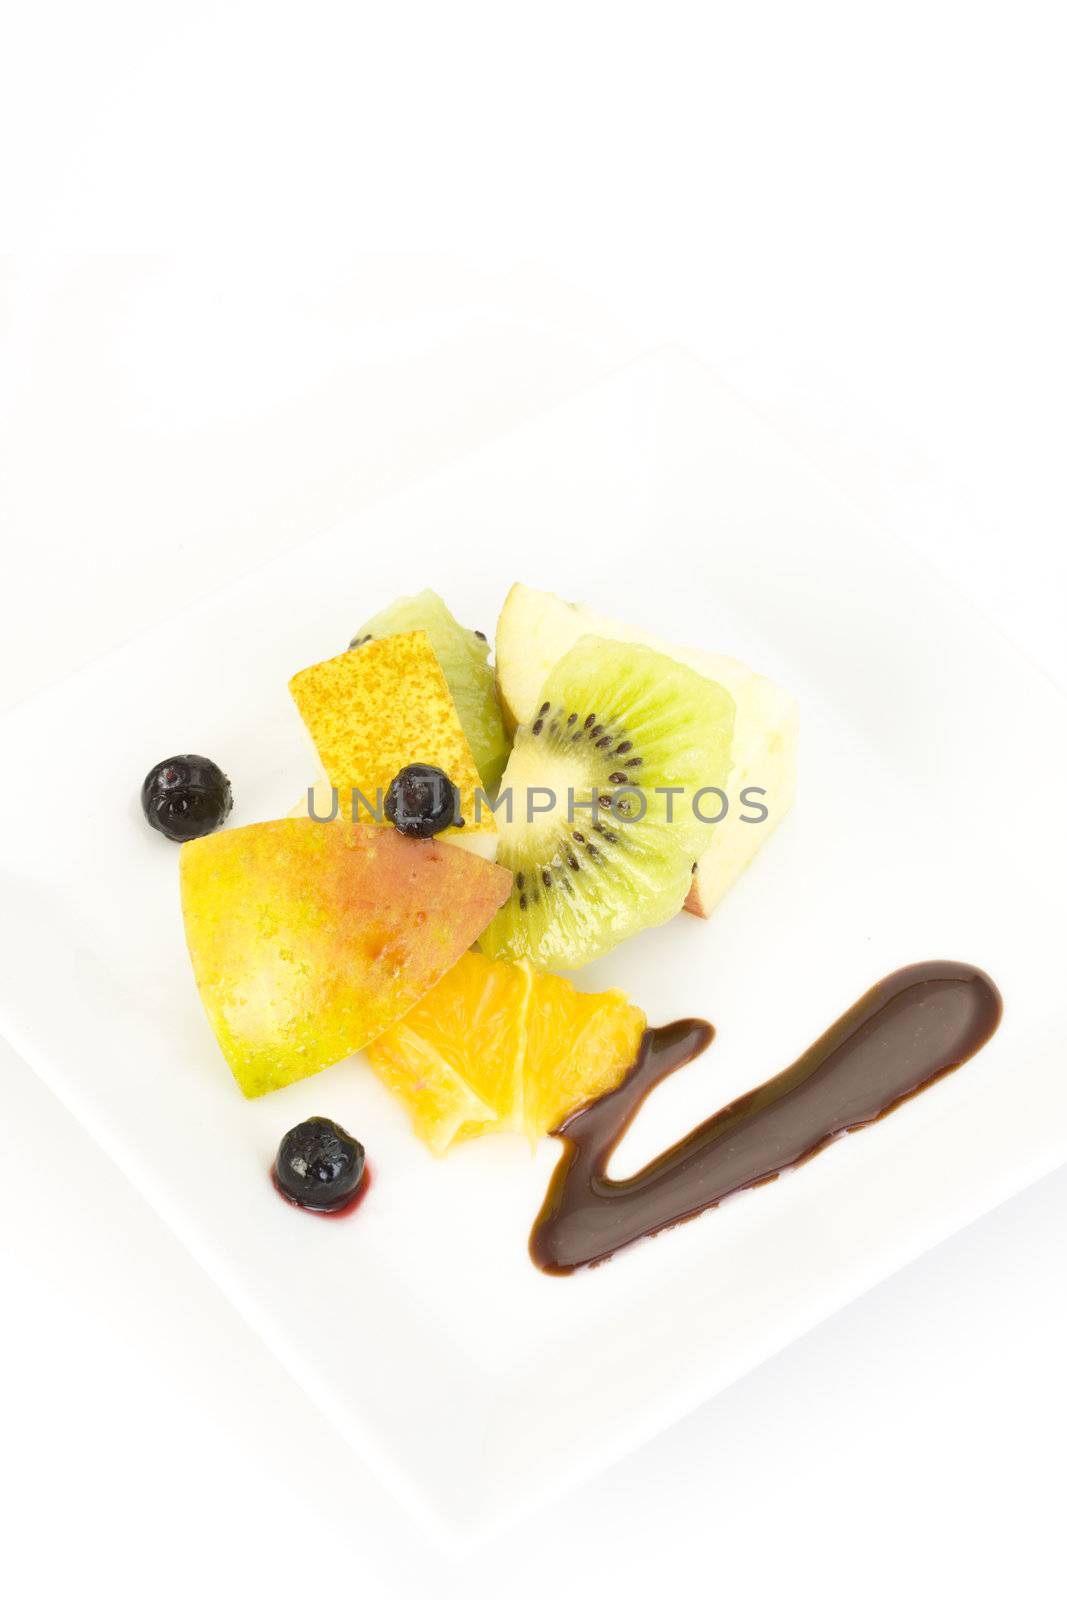 fruit salad composed of kiwi, orange, apple, lime and lemon slices